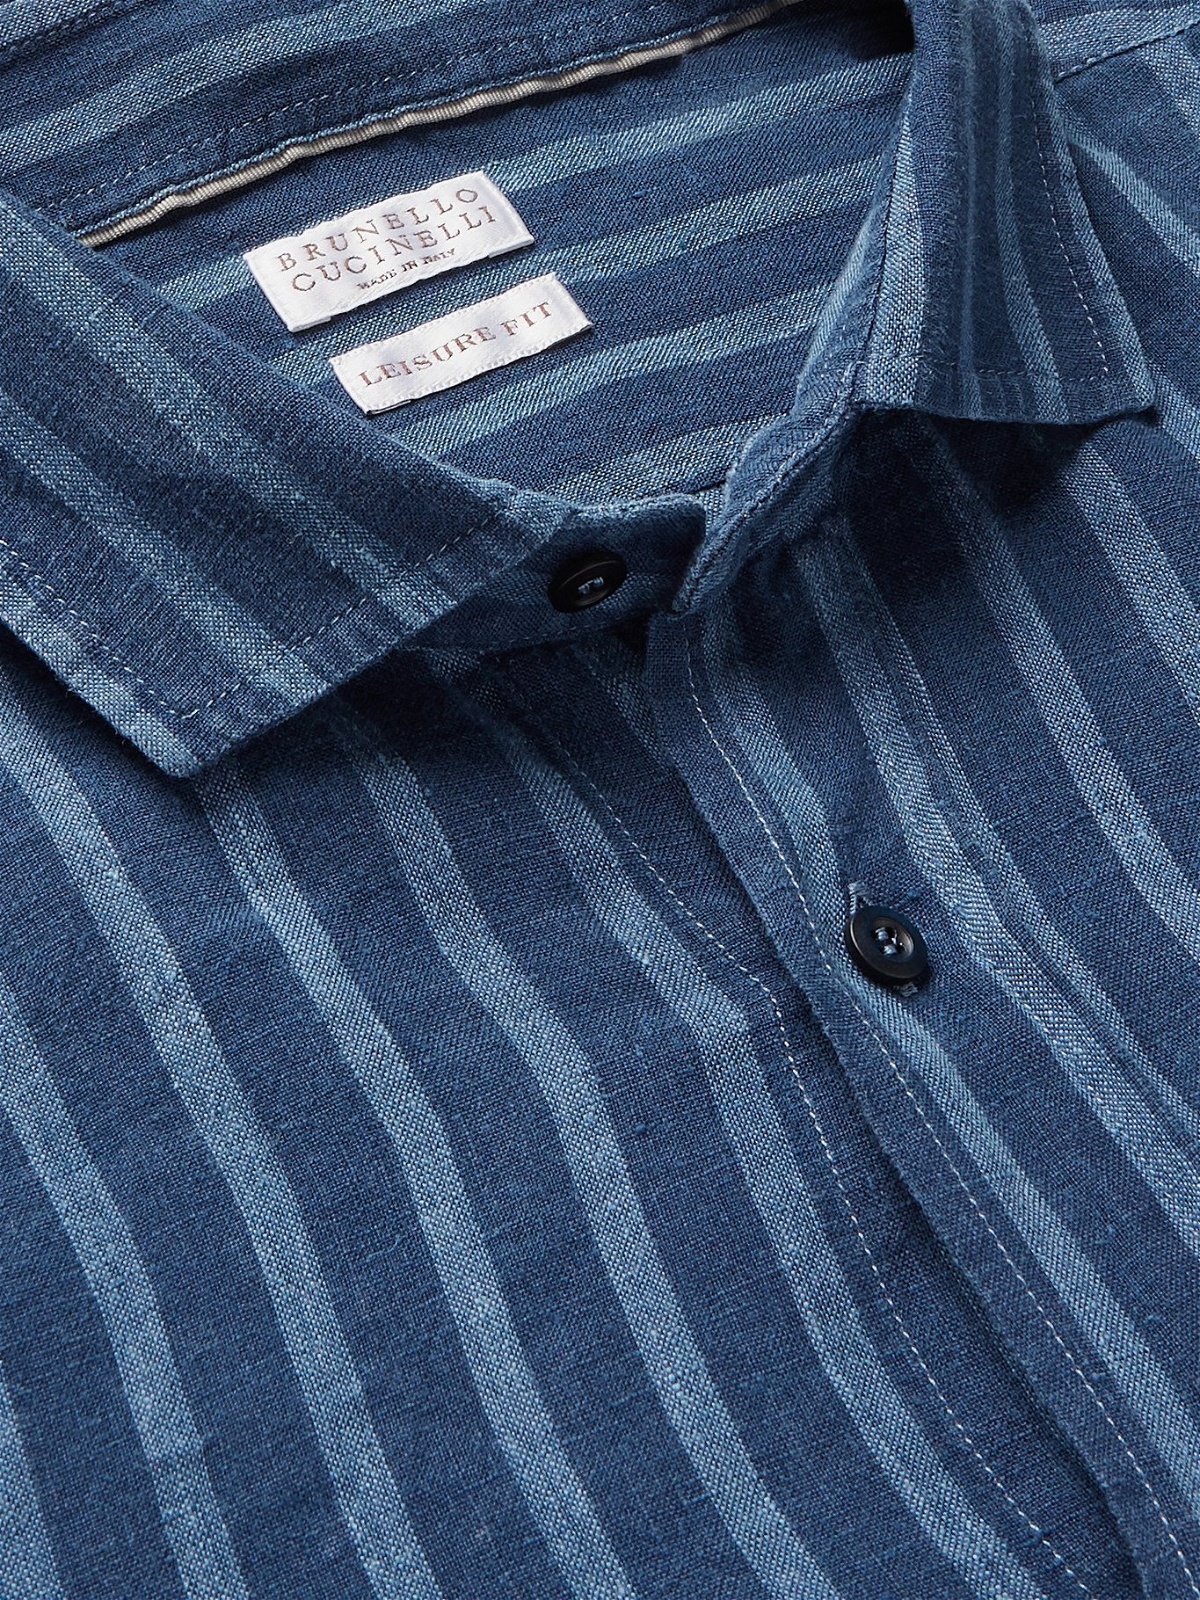 BRUNELLO CUCINELLI - Striped Linen Shirt - Blue Brunello Cucinelli